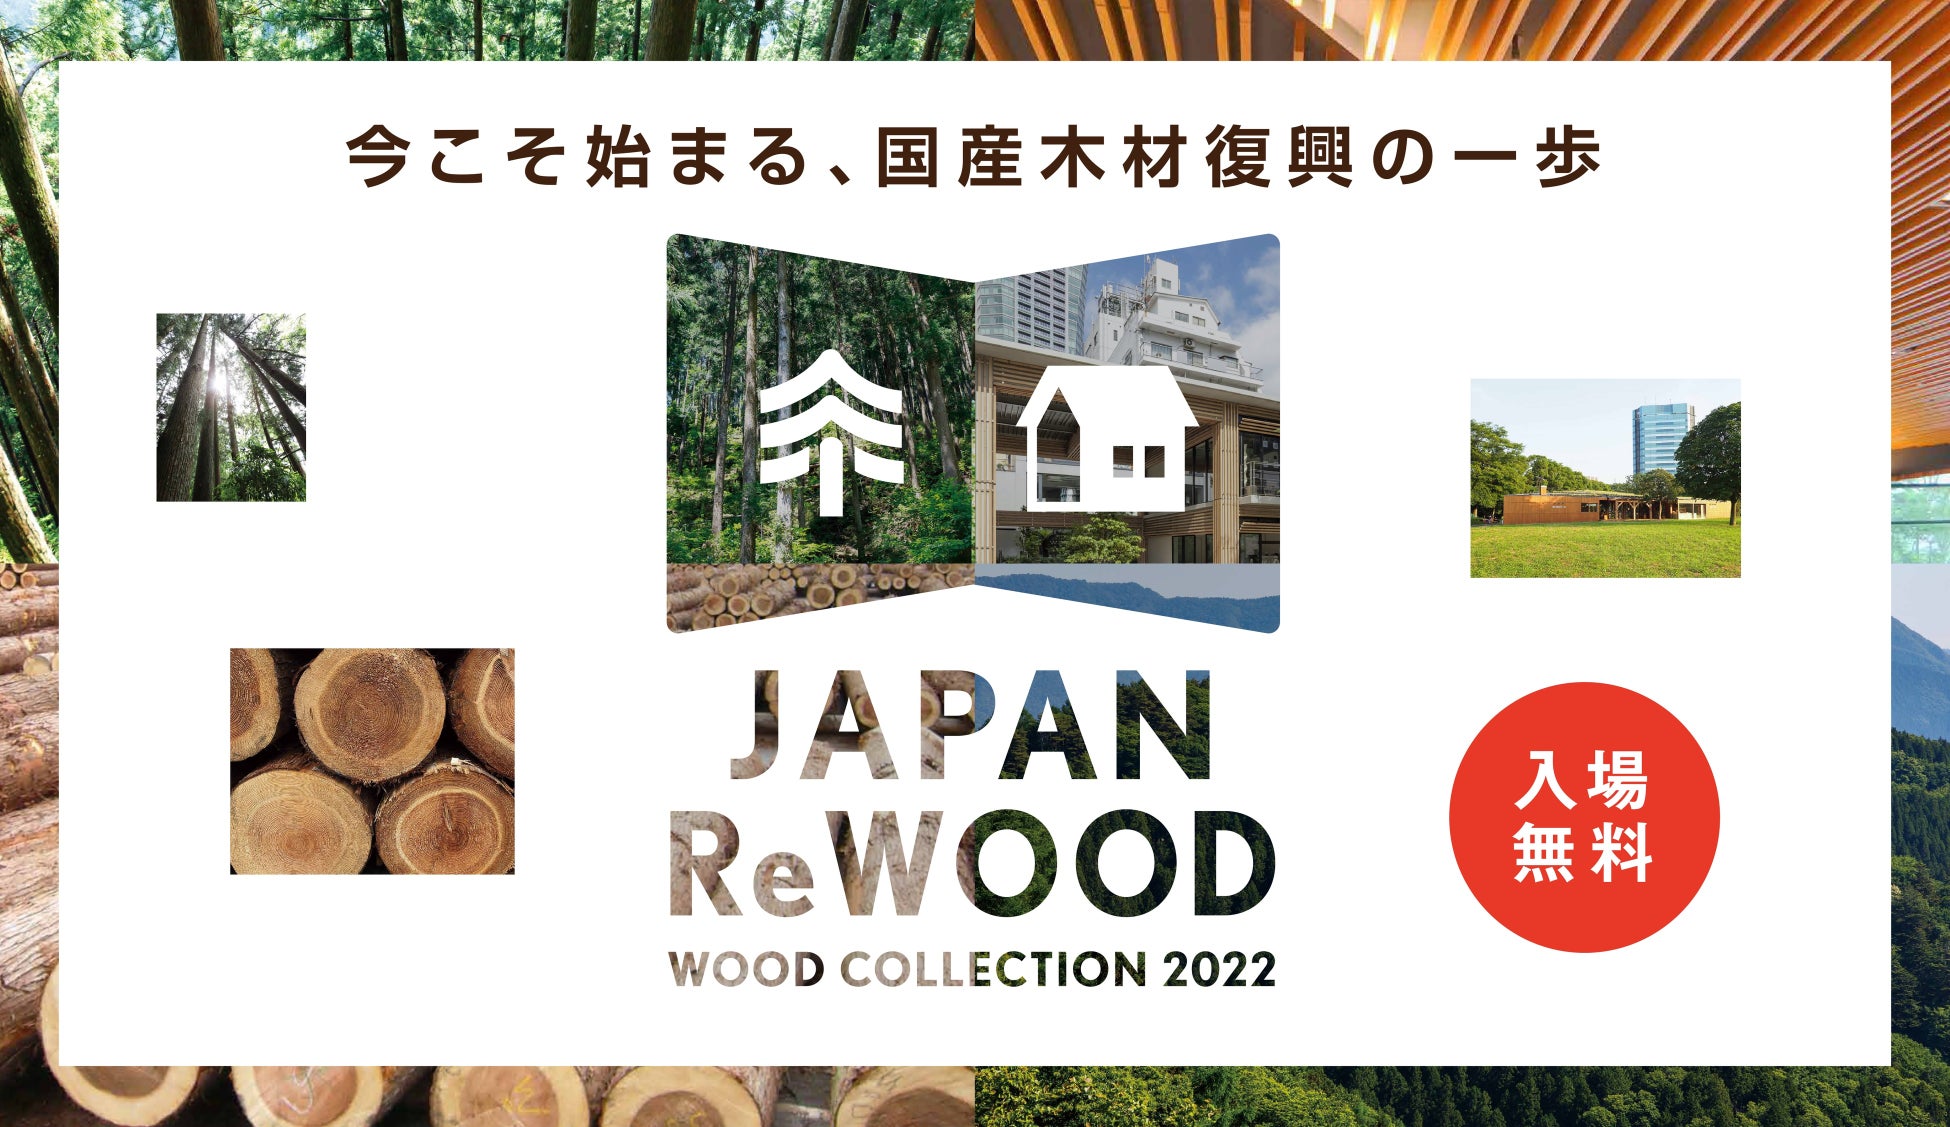 WOOD COLLECTION 2022『JAPAN ReWOOD』　開催のサブ画像1